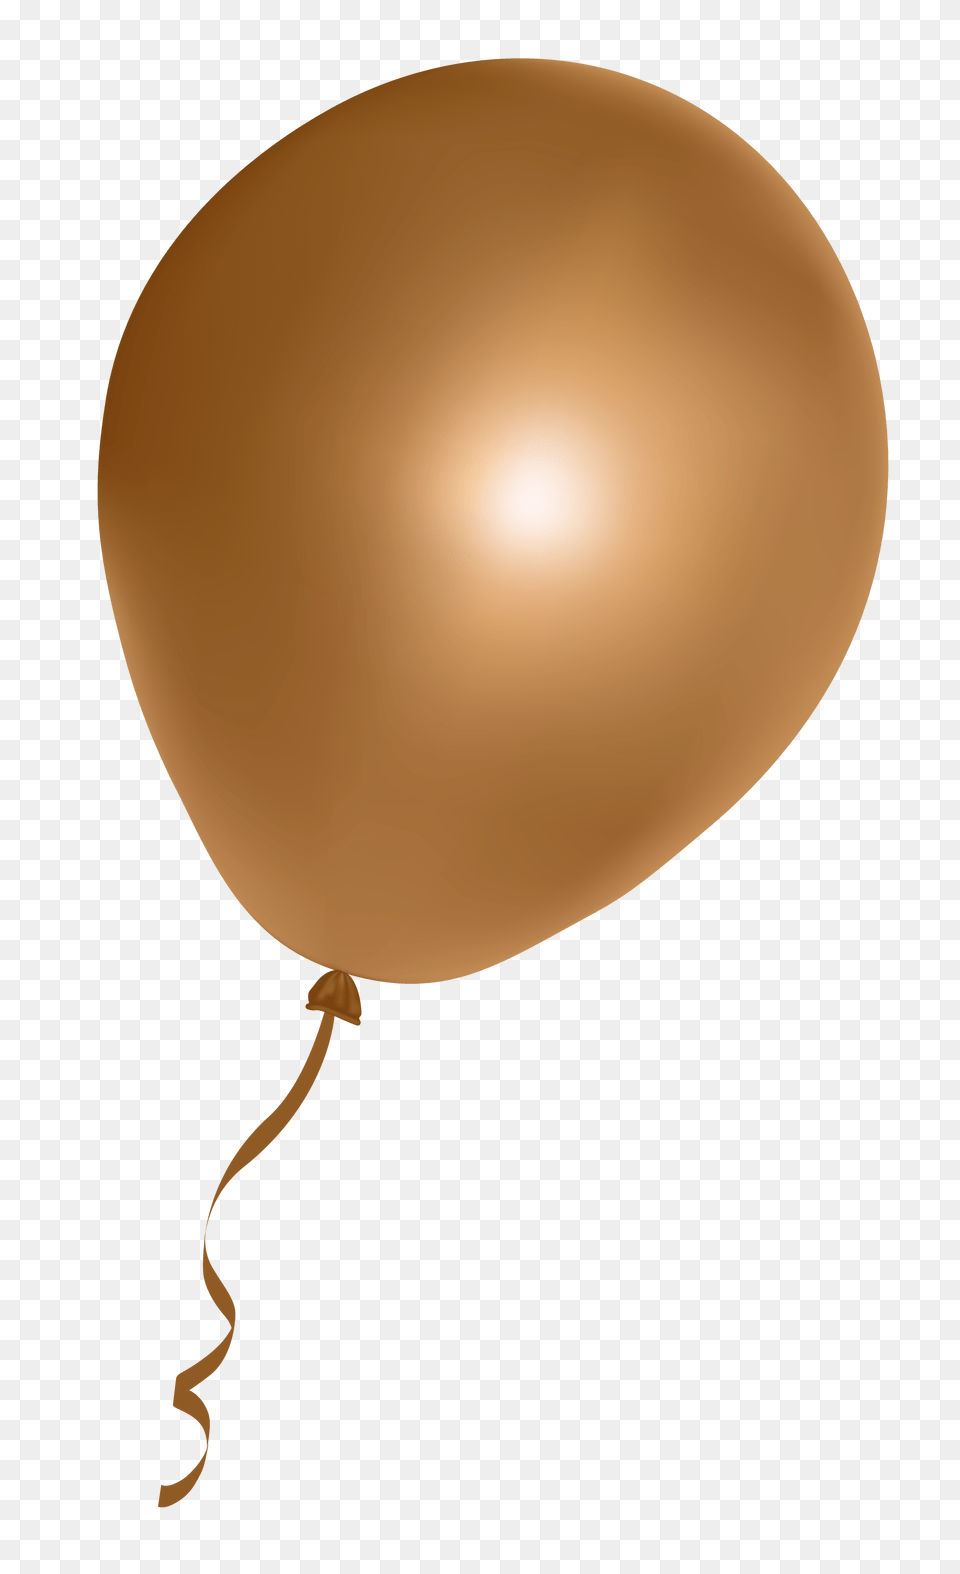 Pngpix Com Golden Brown Balloon Image Free Png